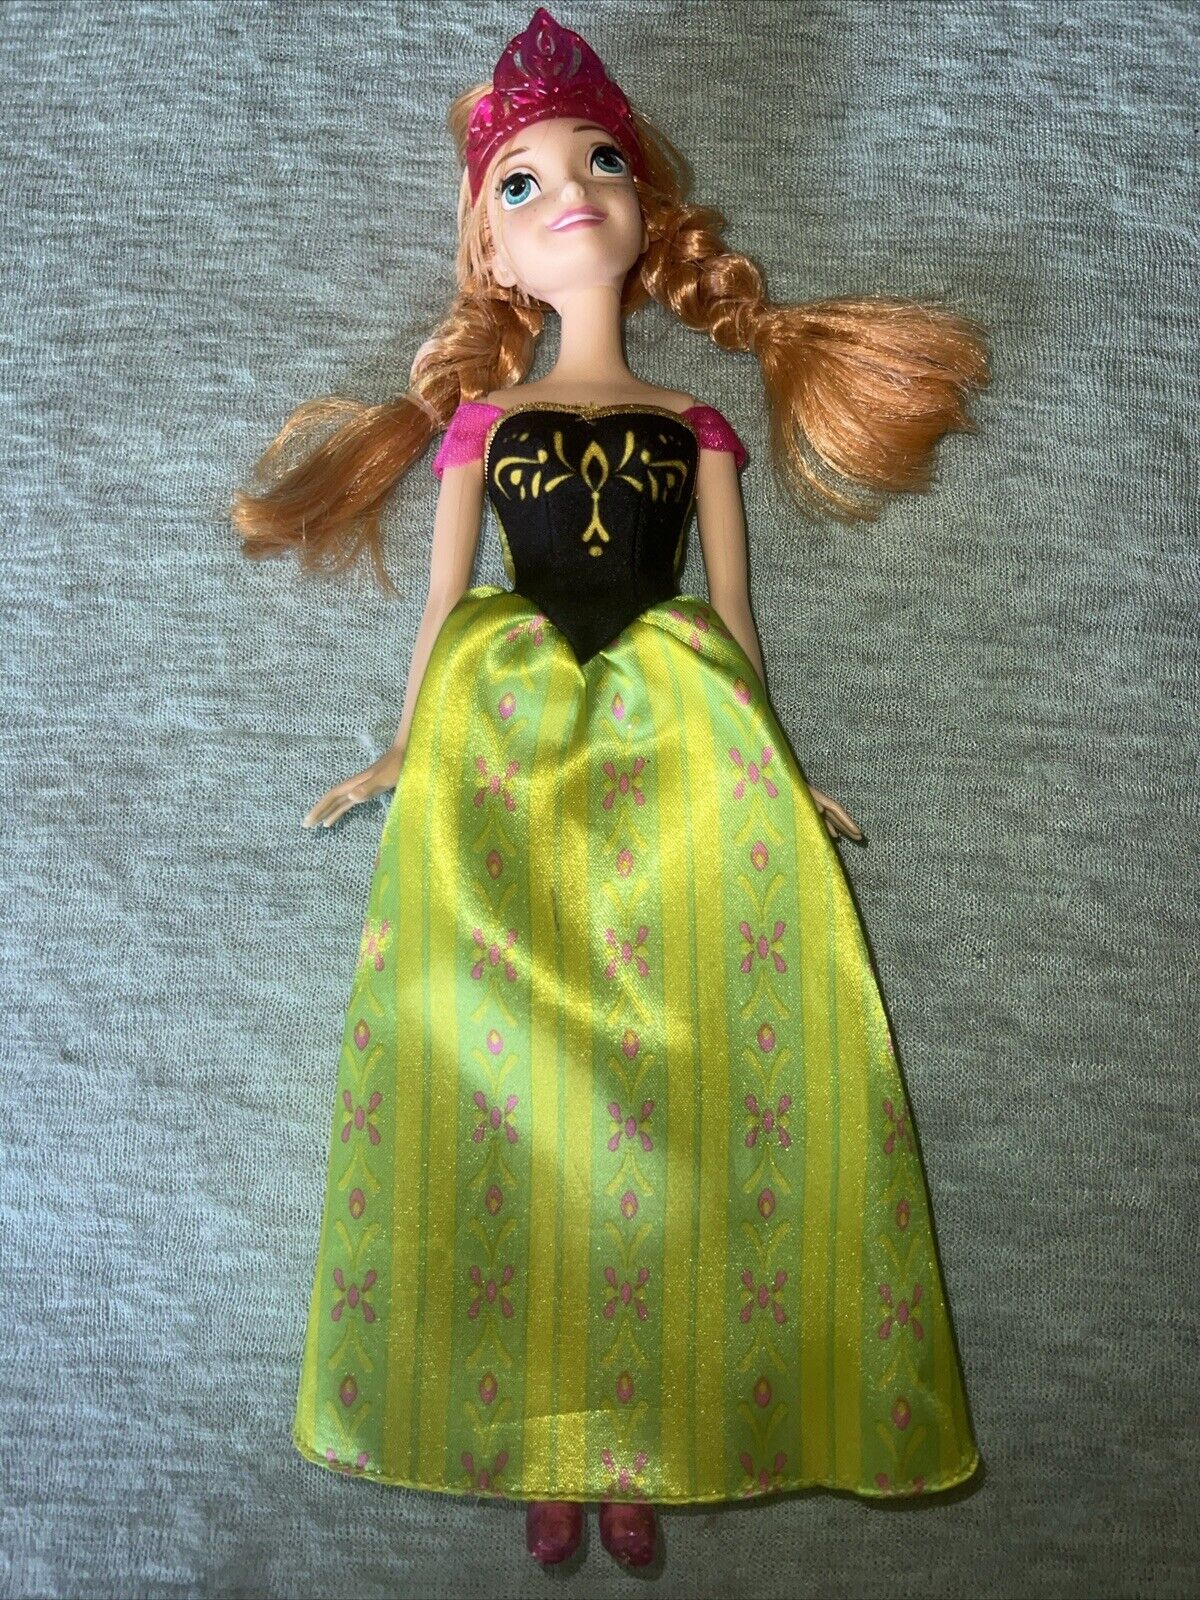 DISNEY PRINCESS ANA Mattel Barbie Doll Excellent Condition